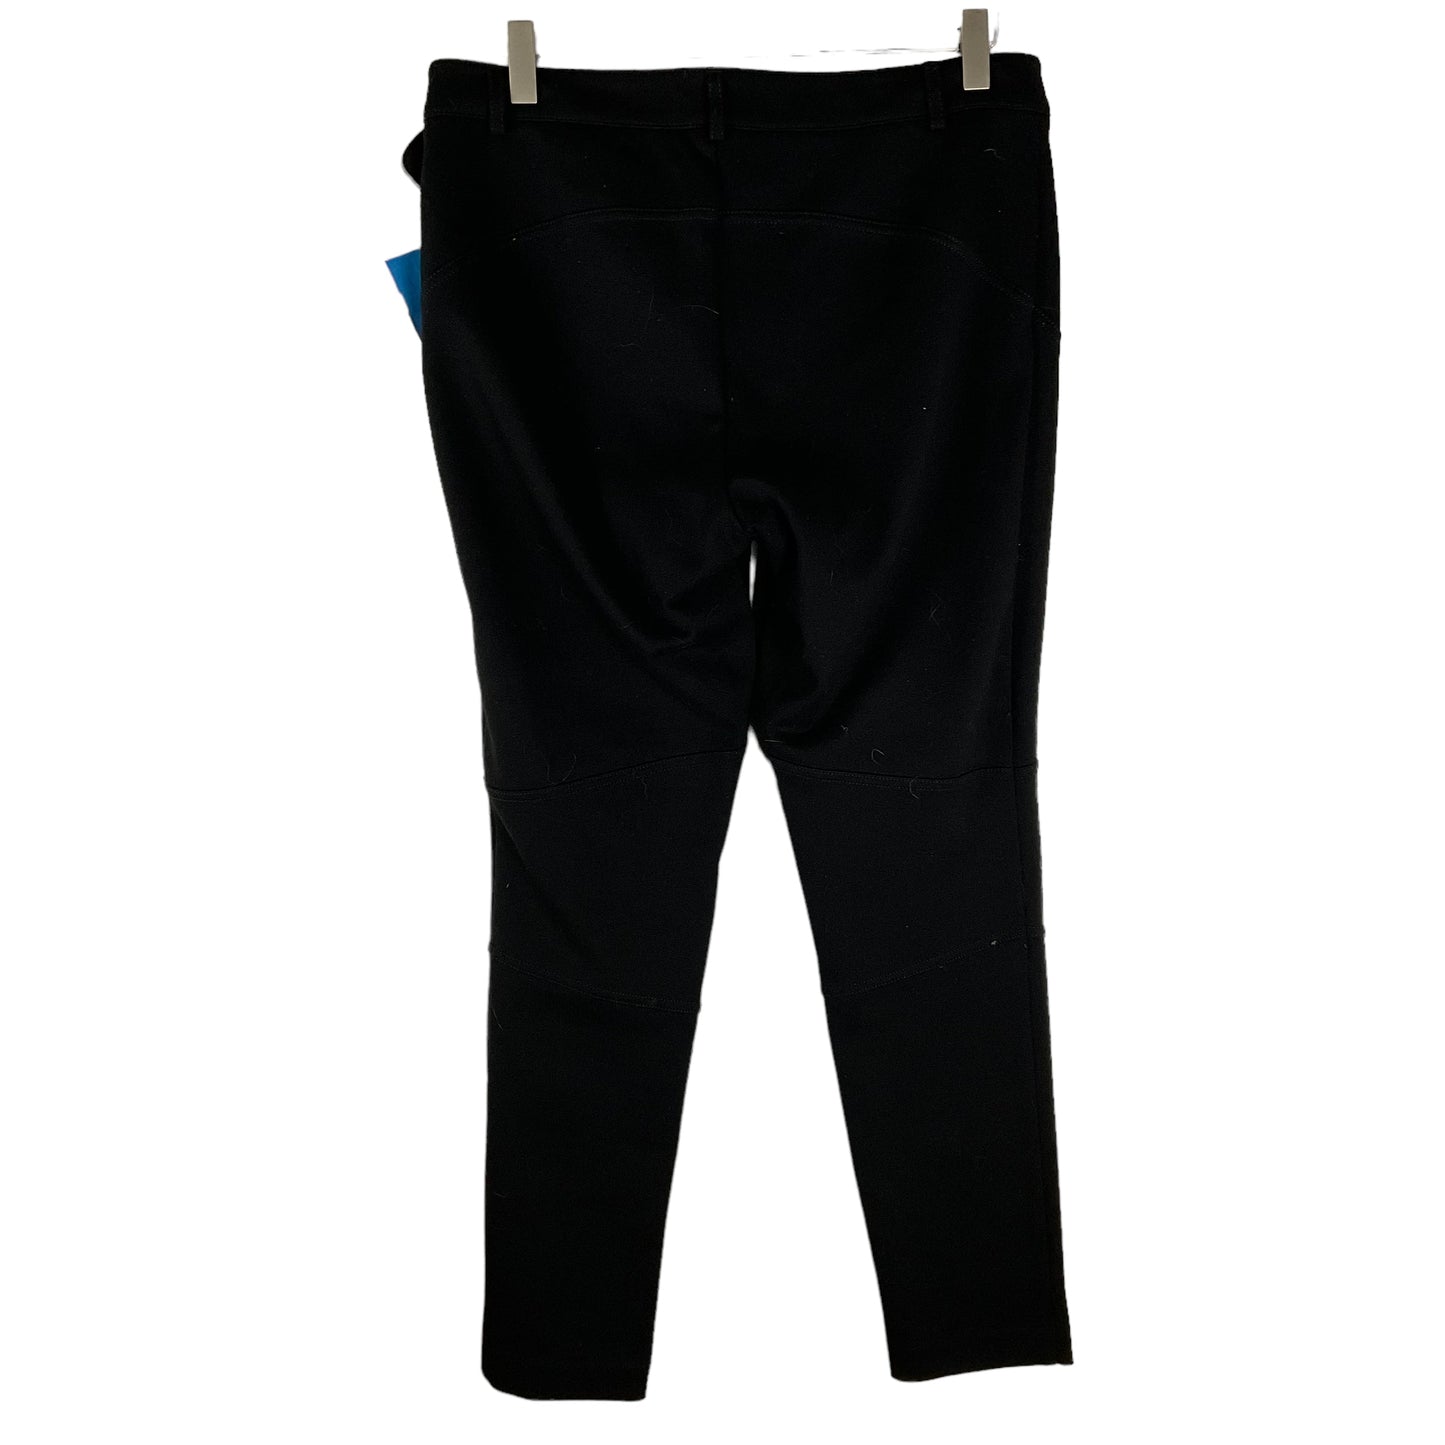 Pants Designer By Michael Kors  Size: M